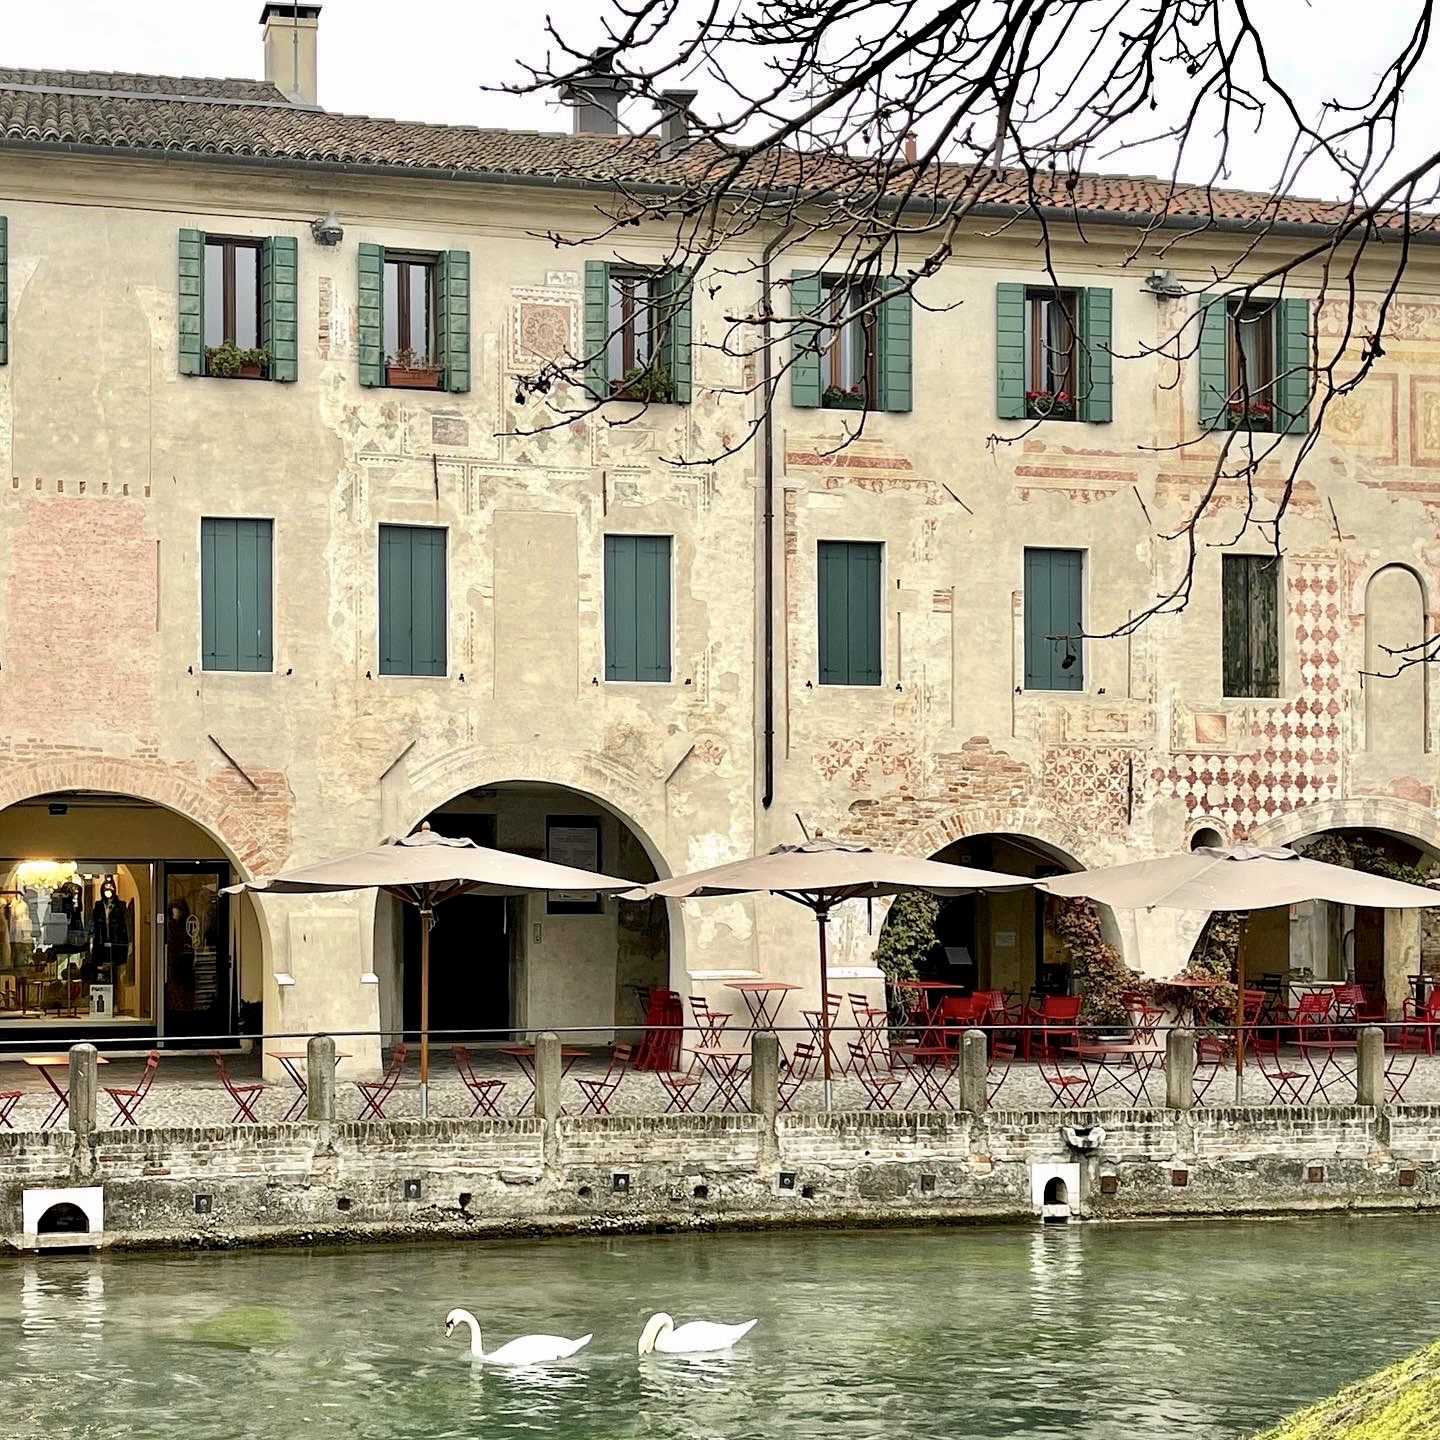 Treviso urbs picta